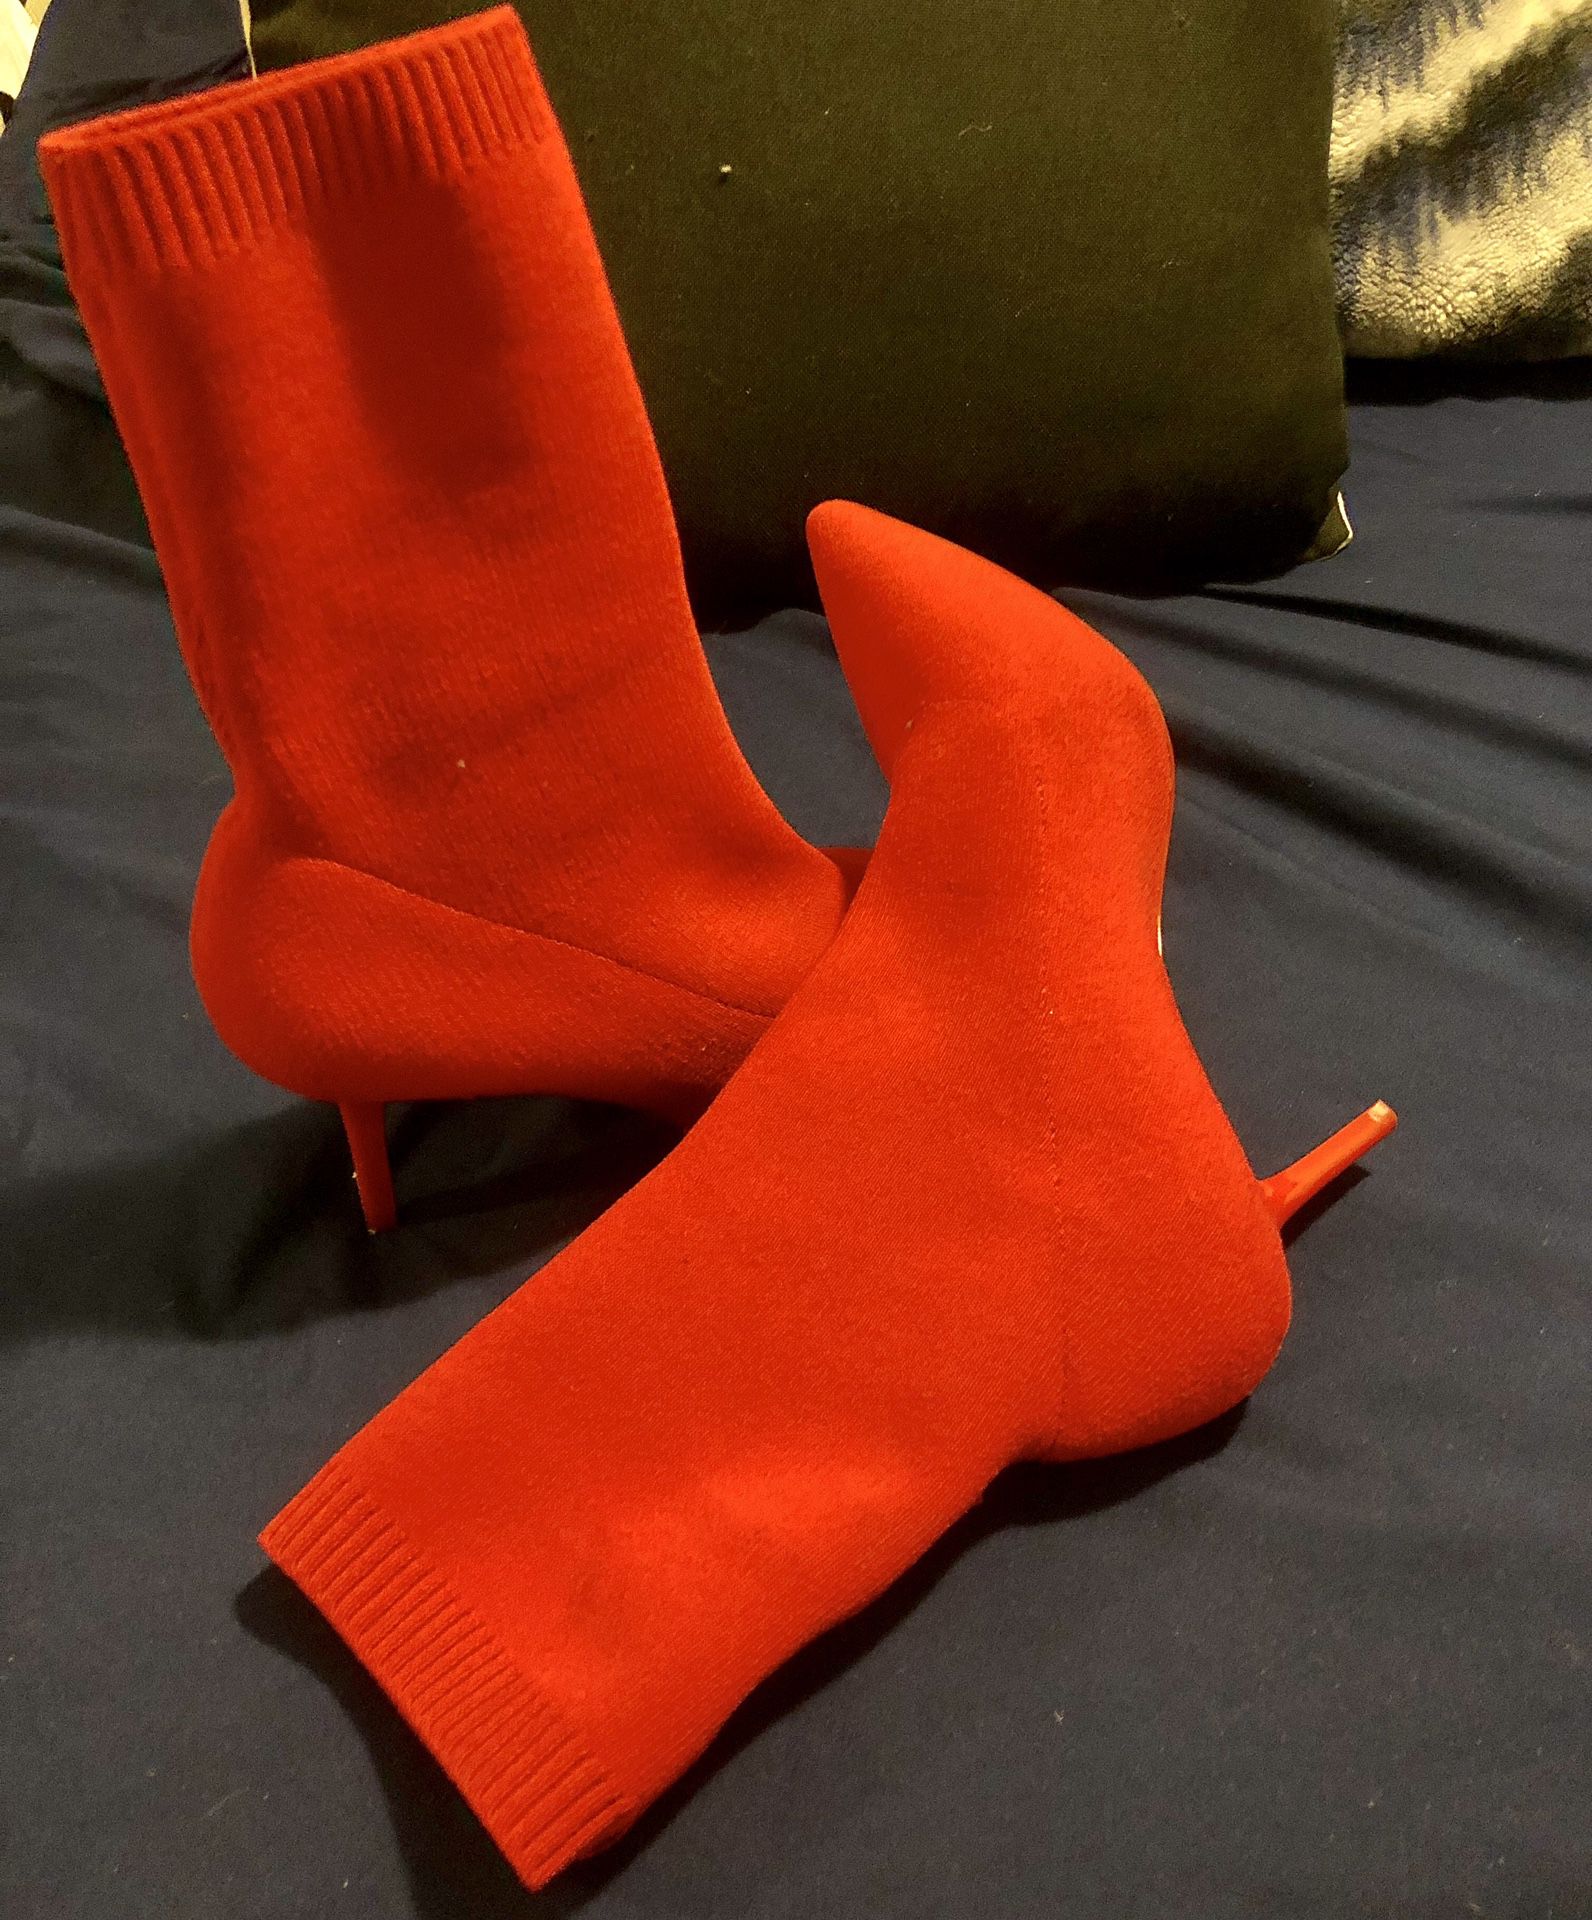 Aldo boots red 7.5